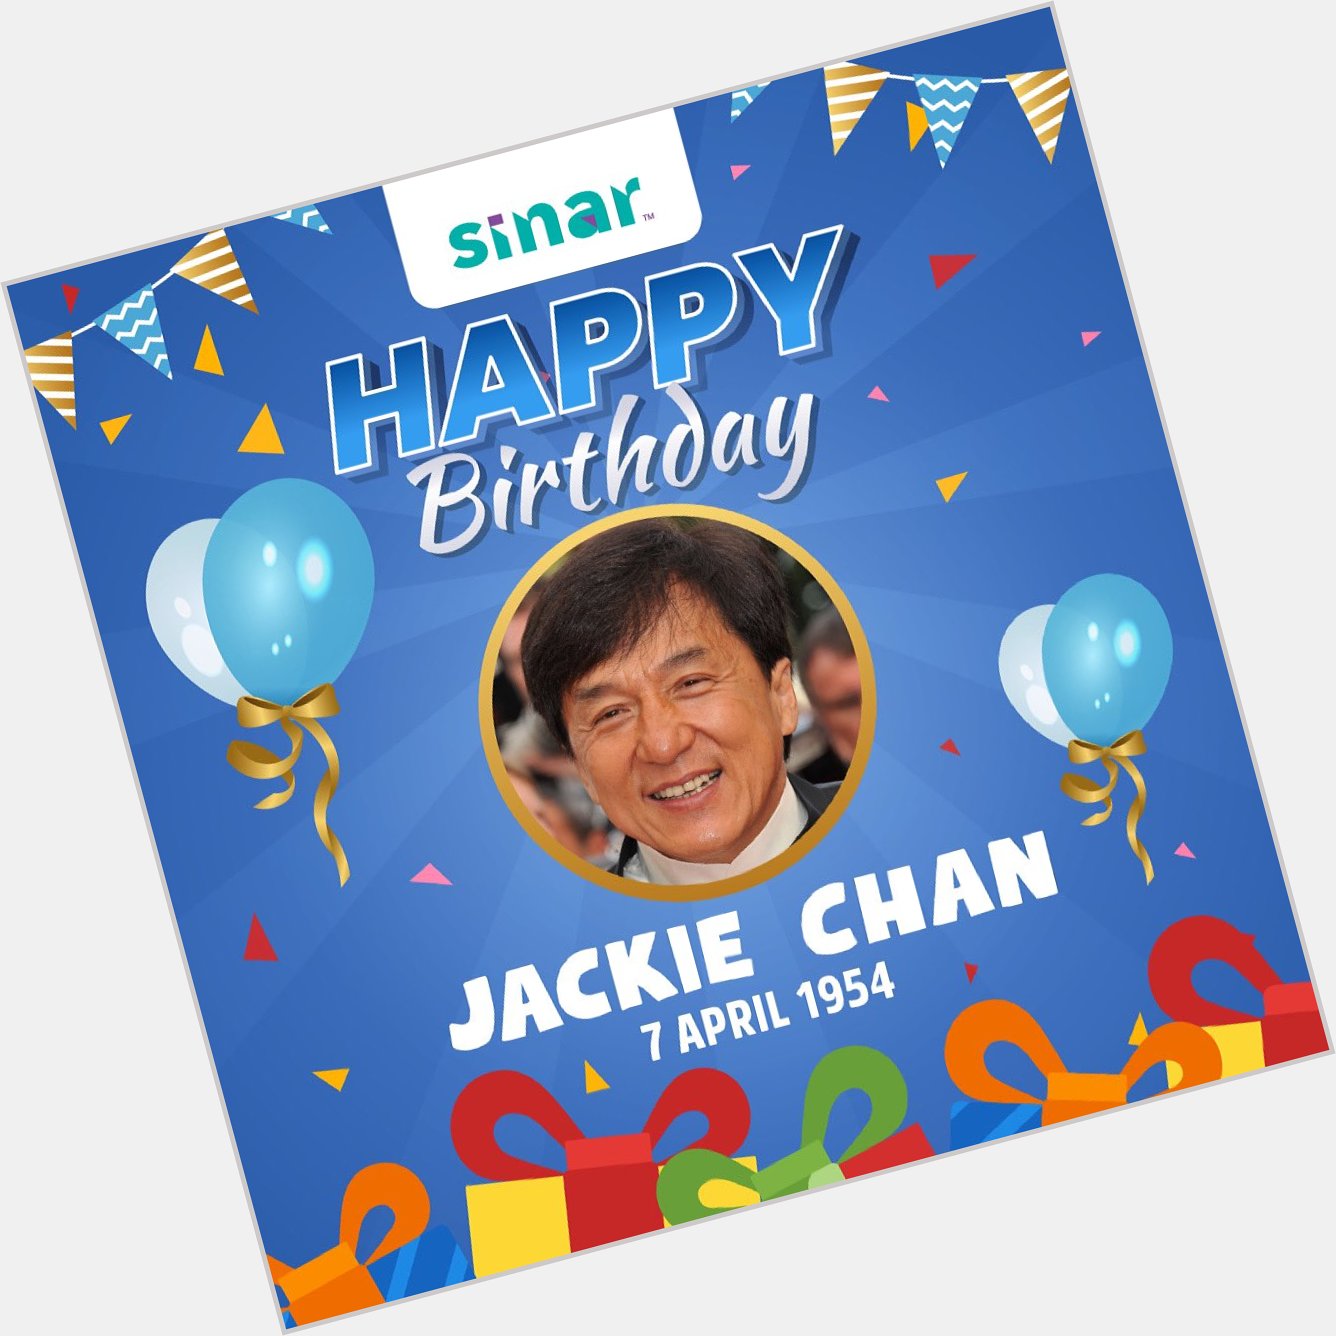 Happy birthday Jackie Chan ! Apa filem lakonan beliau yang anda suka ?  